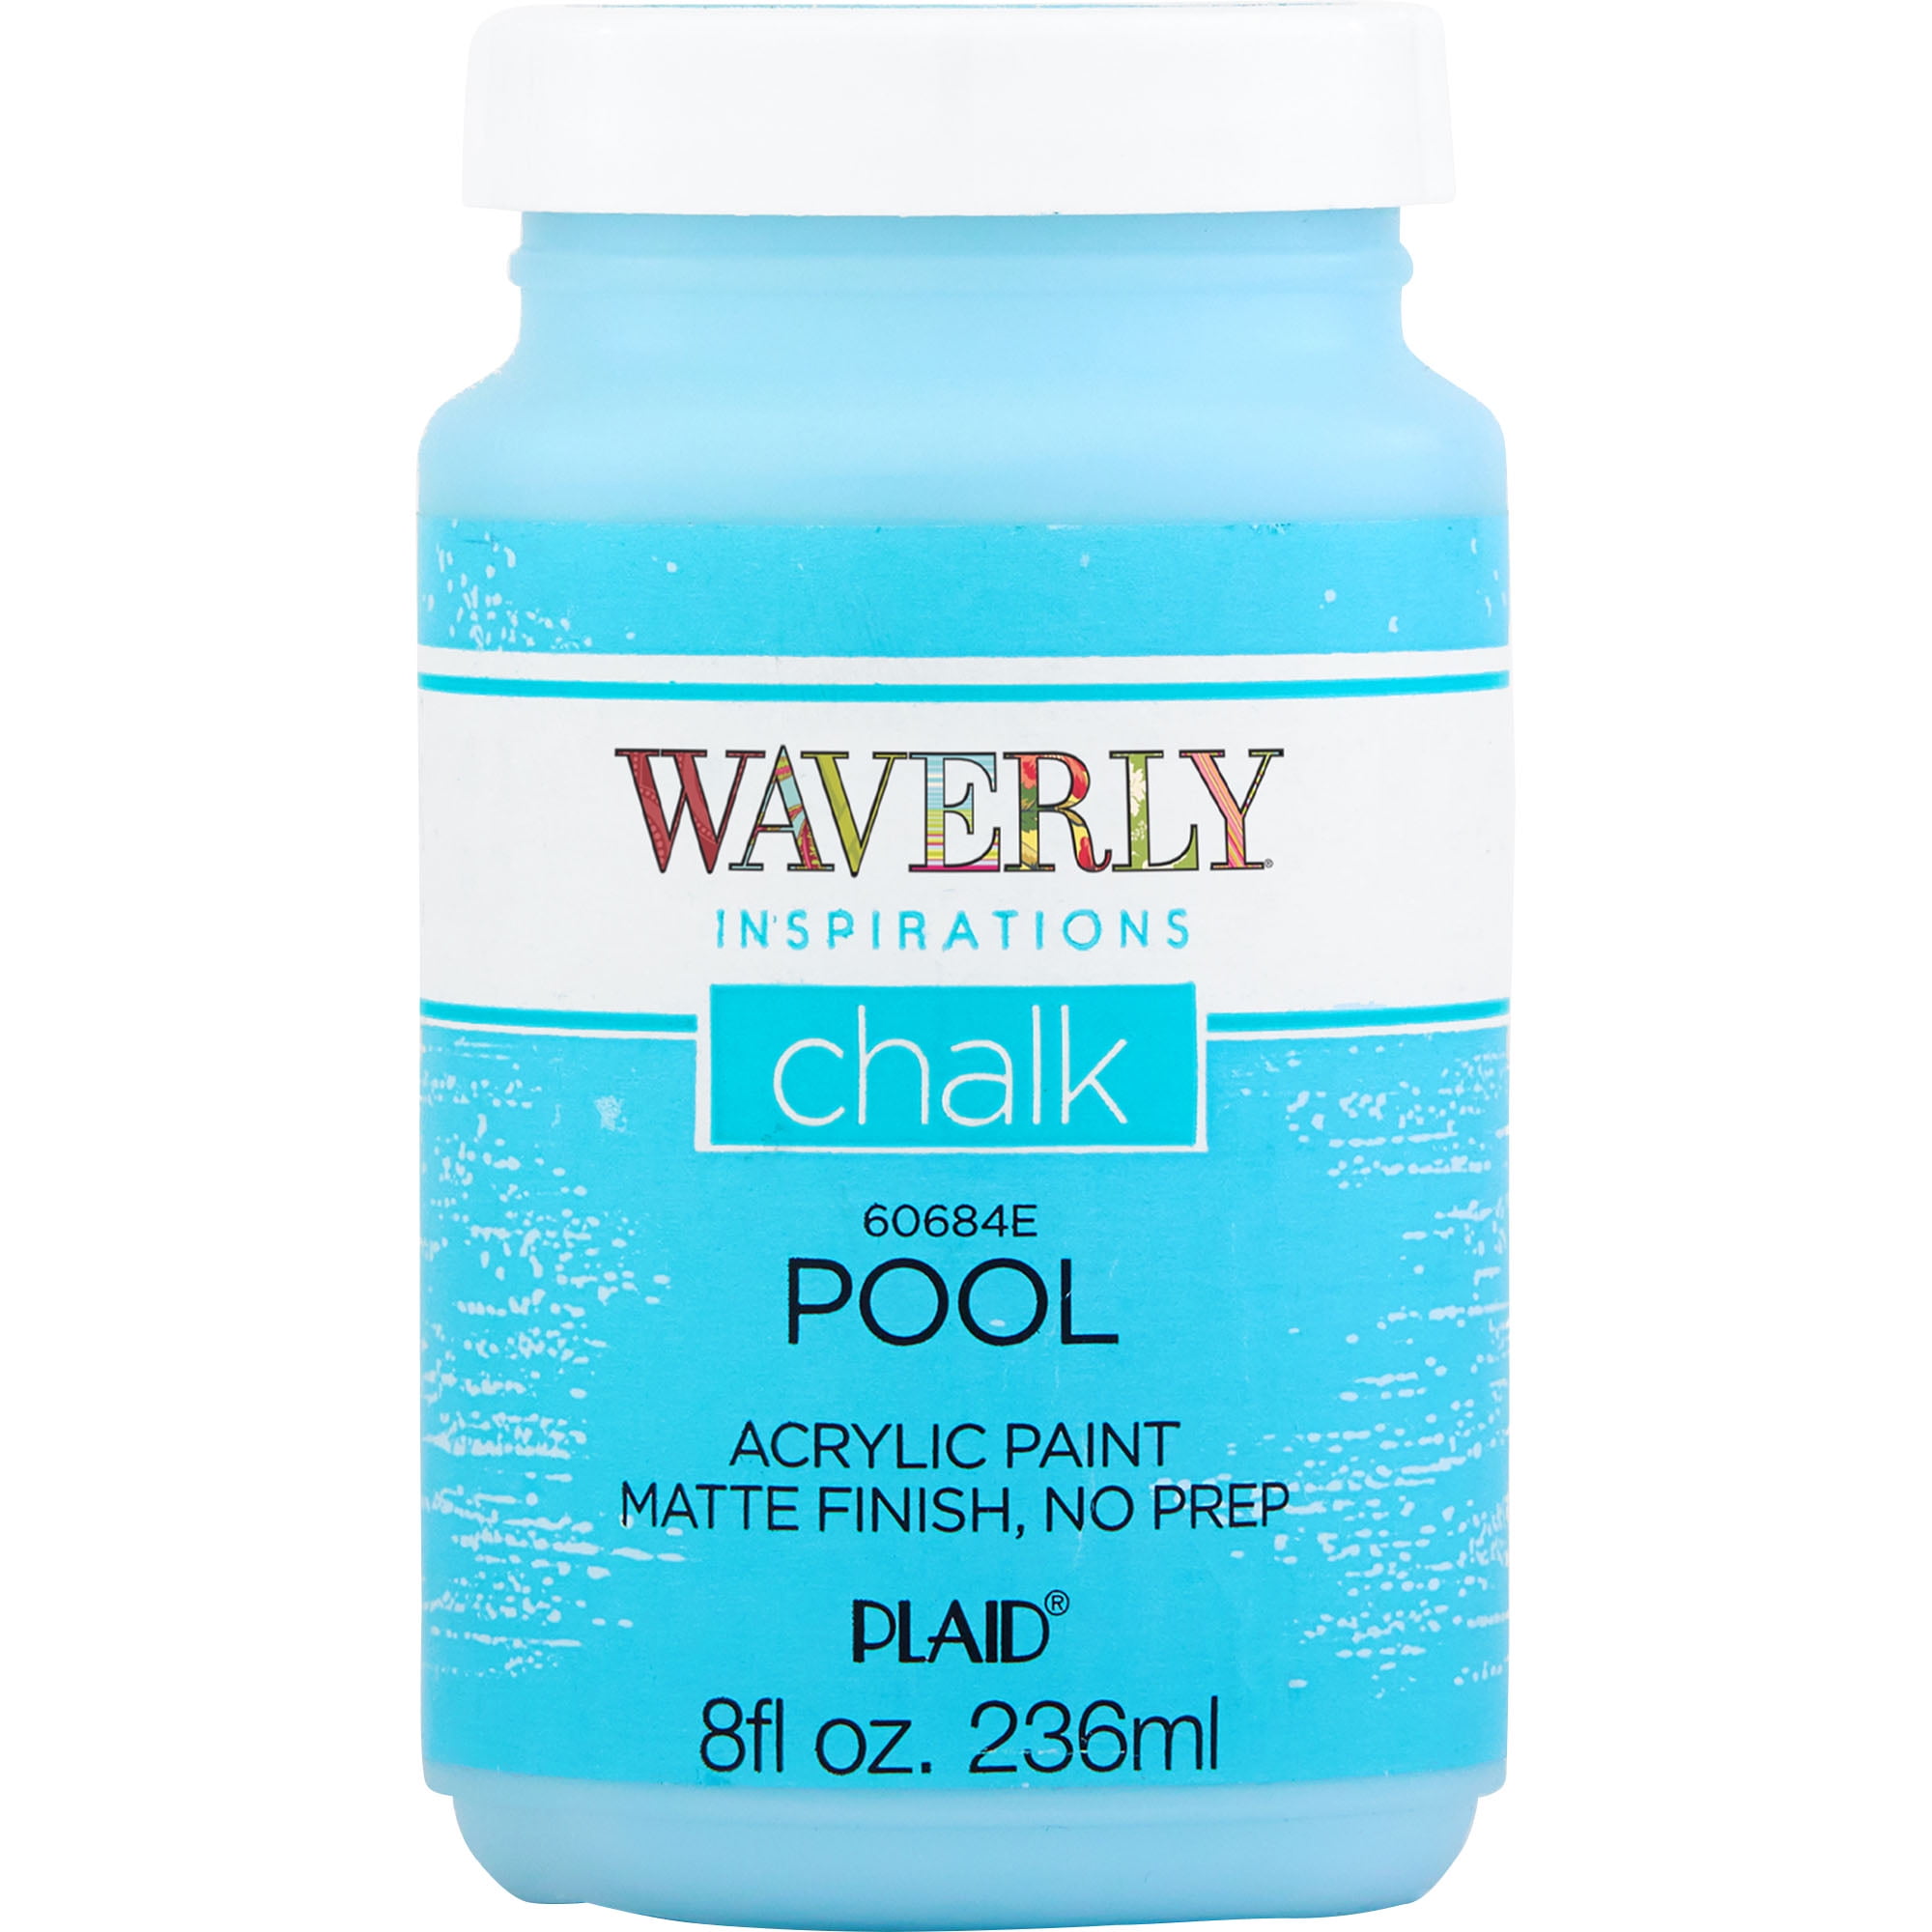 Waverly Inspirations Chalk Paint Kit, Plaster/Mineral/Truffle, Set of 3, 8  fl oz Each